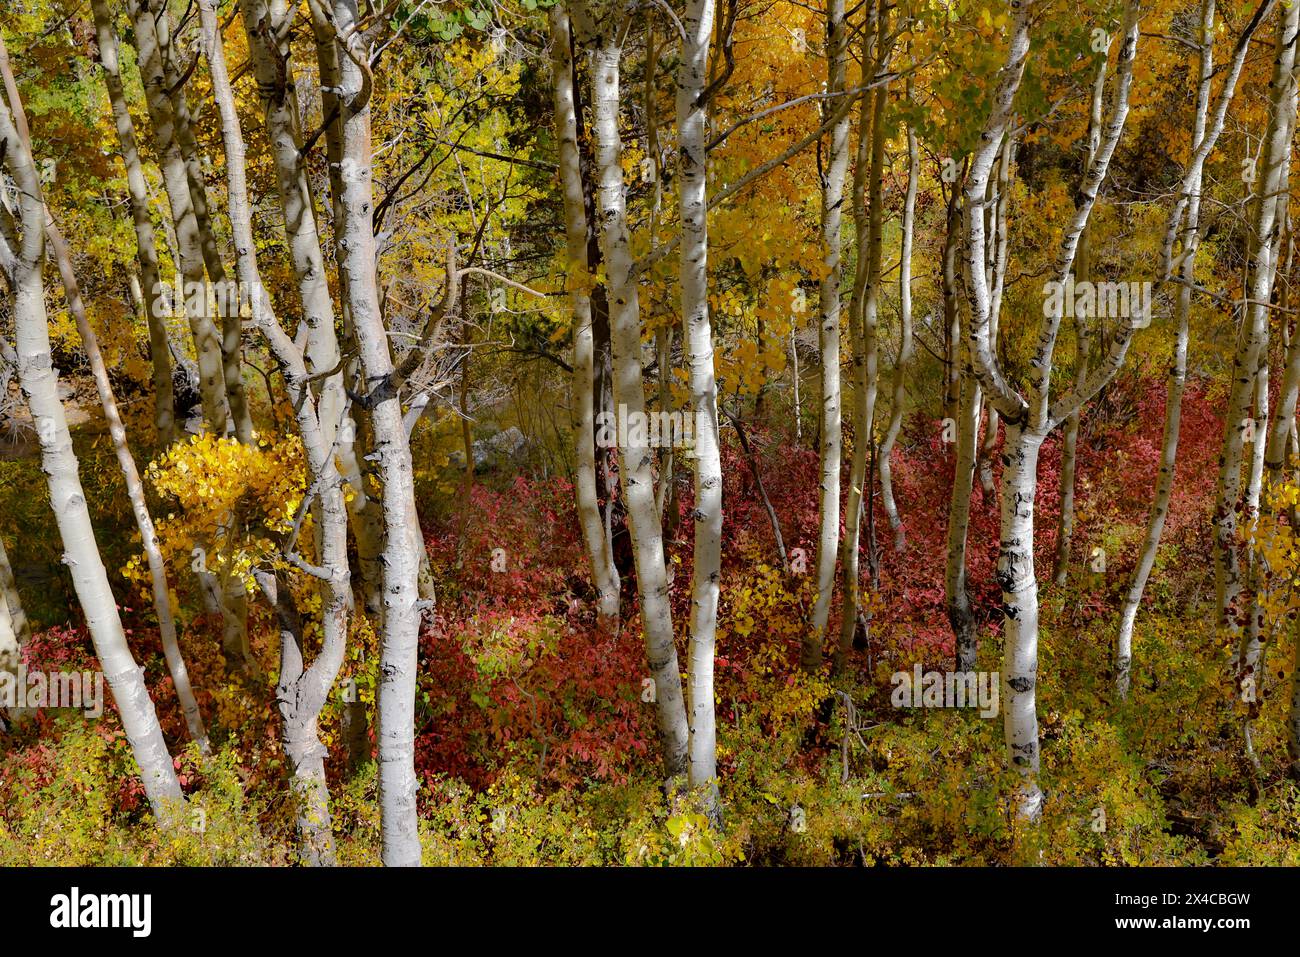 USA, California, June Lake. Aspens in fall color Stock Photo